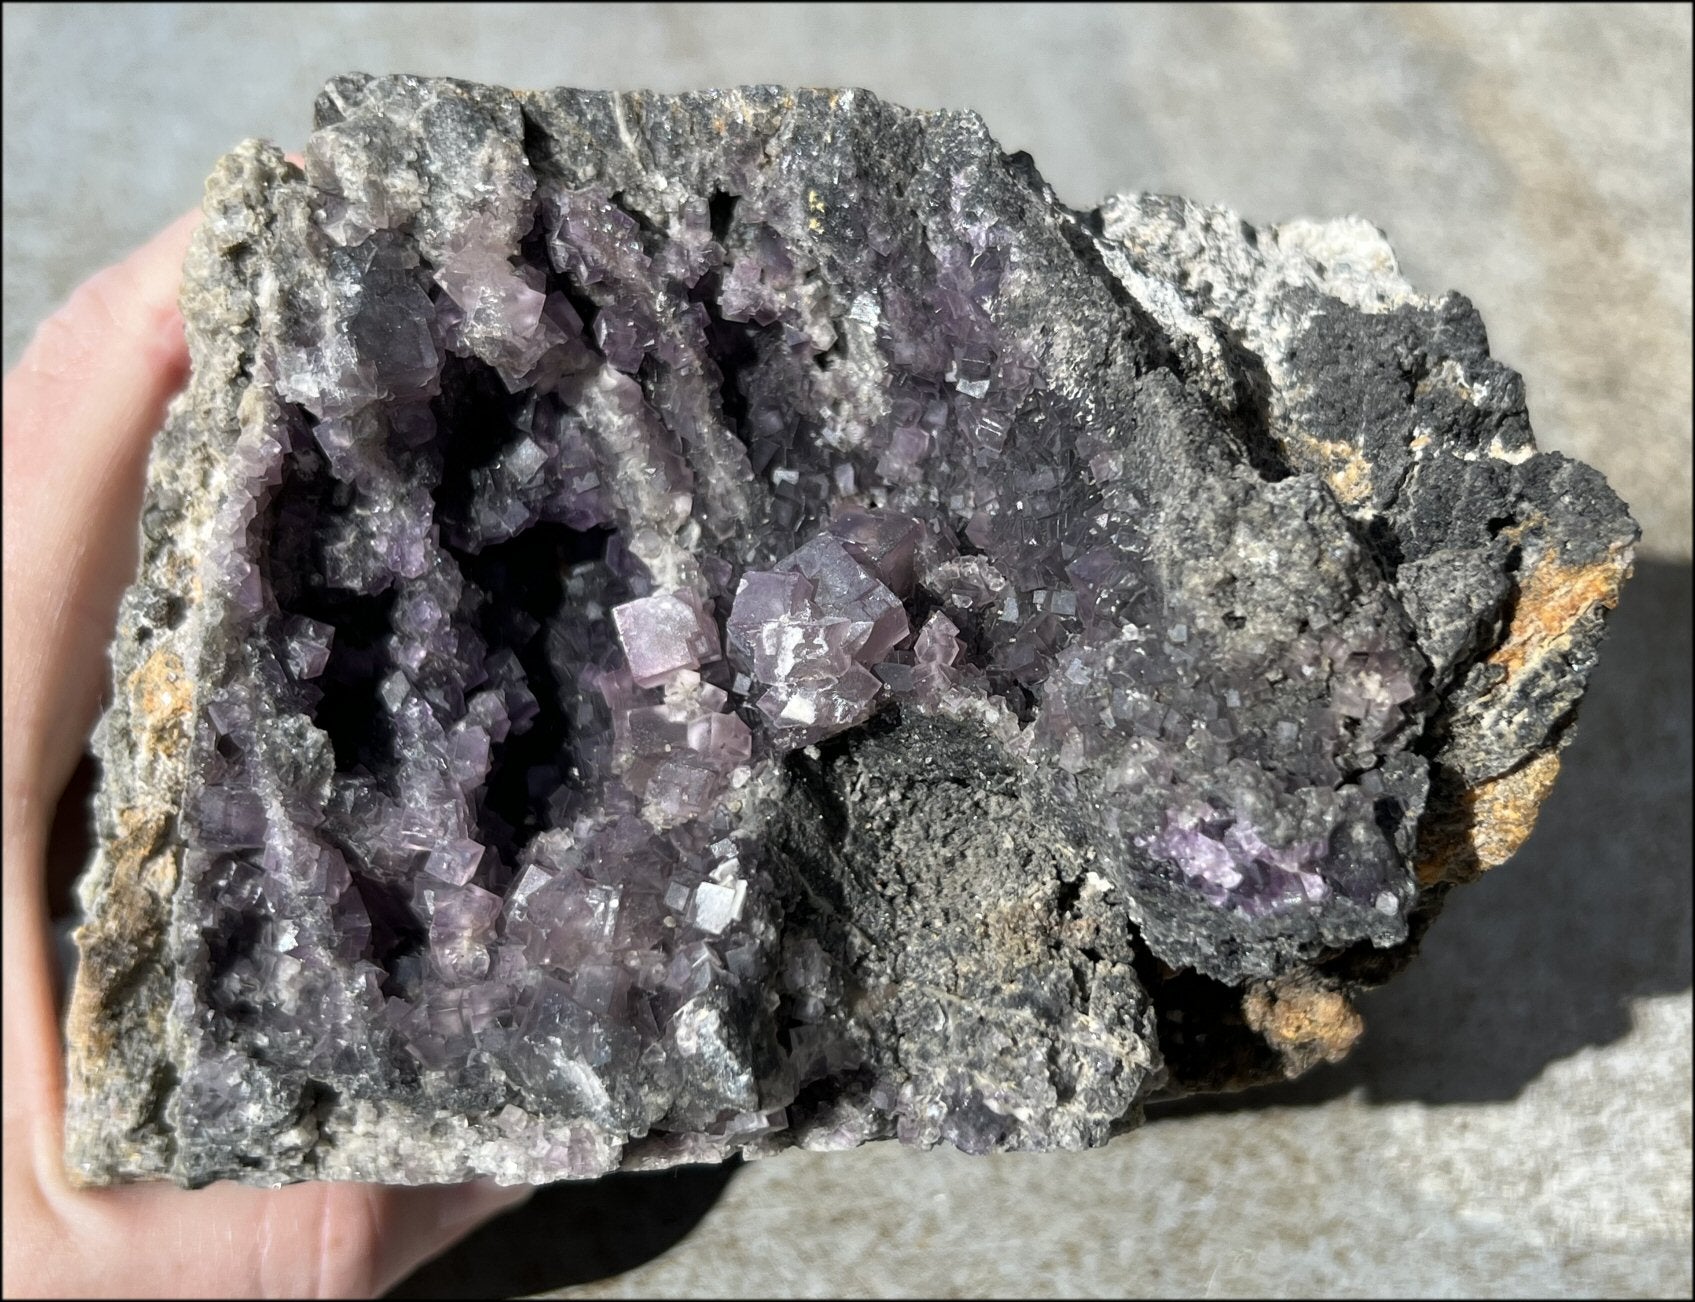 Limestone + Cubic Purple FLUORITE Metamorphosis Crystal Skull with Mesmerizing Vugs - Just over 6lbs